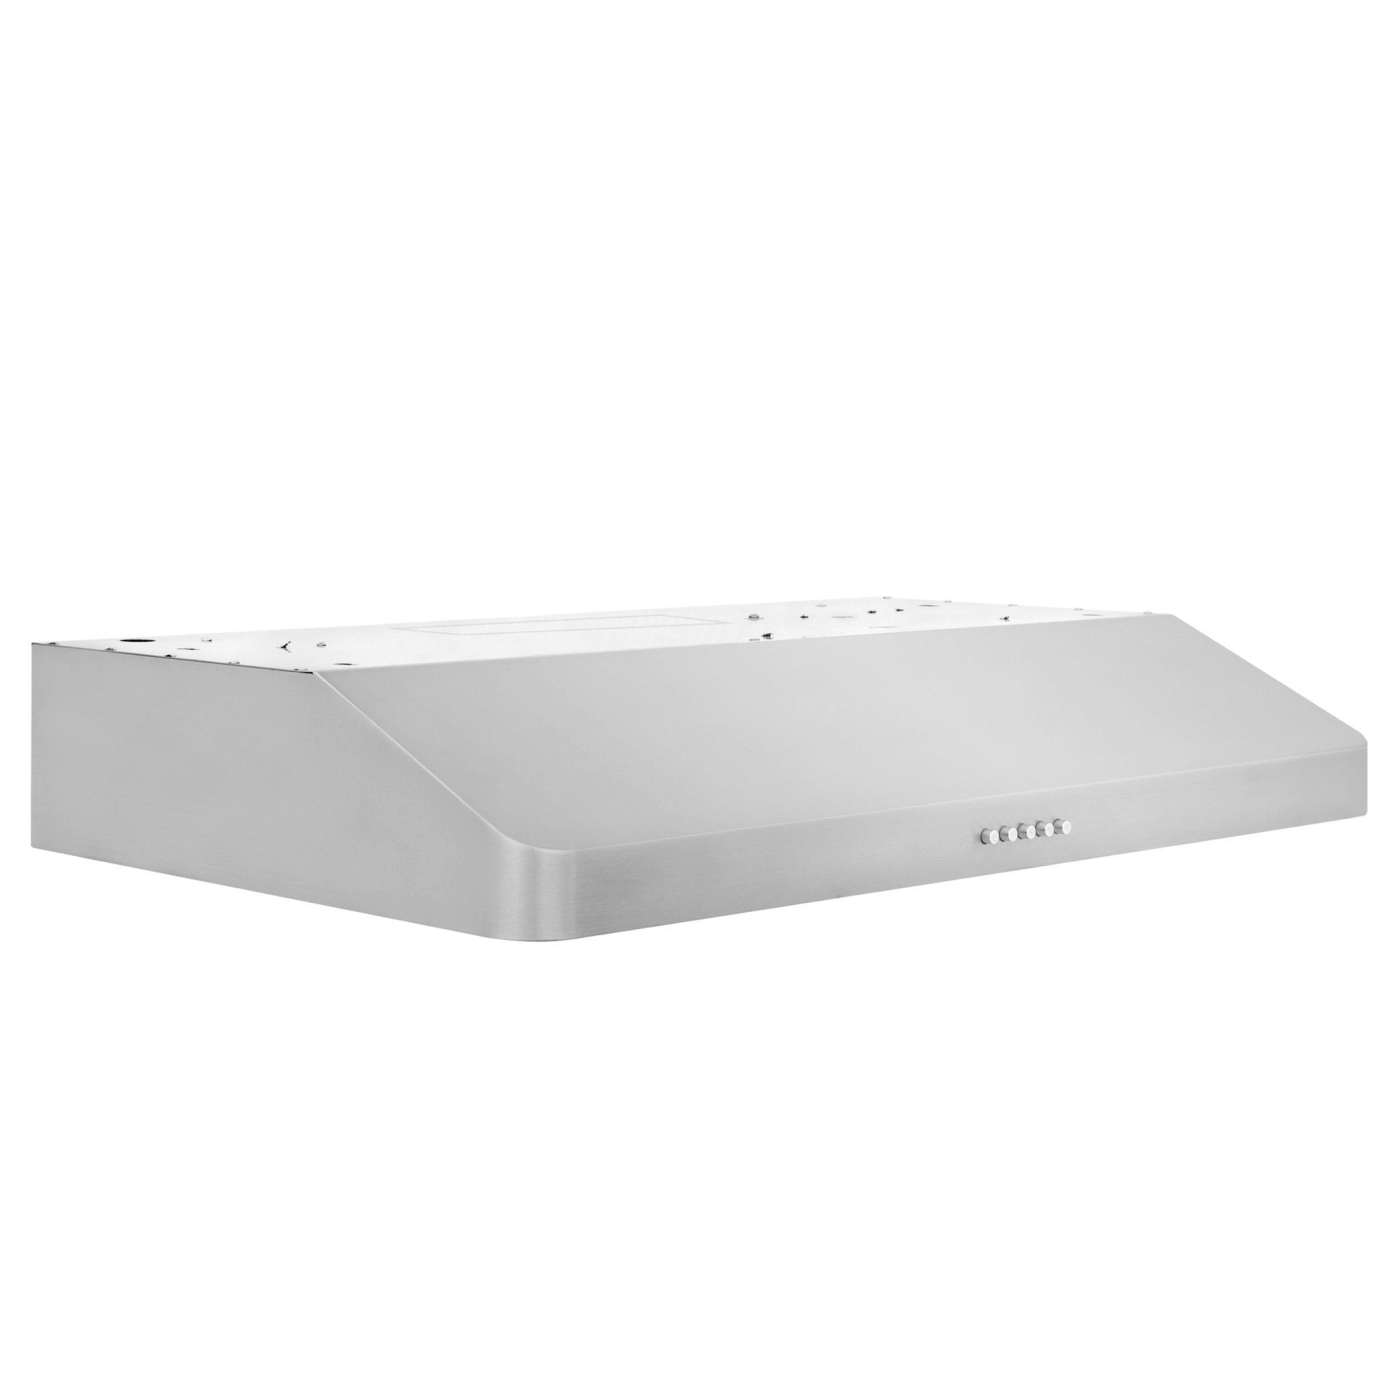 ZLINE 400 CFM Ducted Under Cabinet Range Hood in Stainless Steel - Hardwired Power (617) - white background